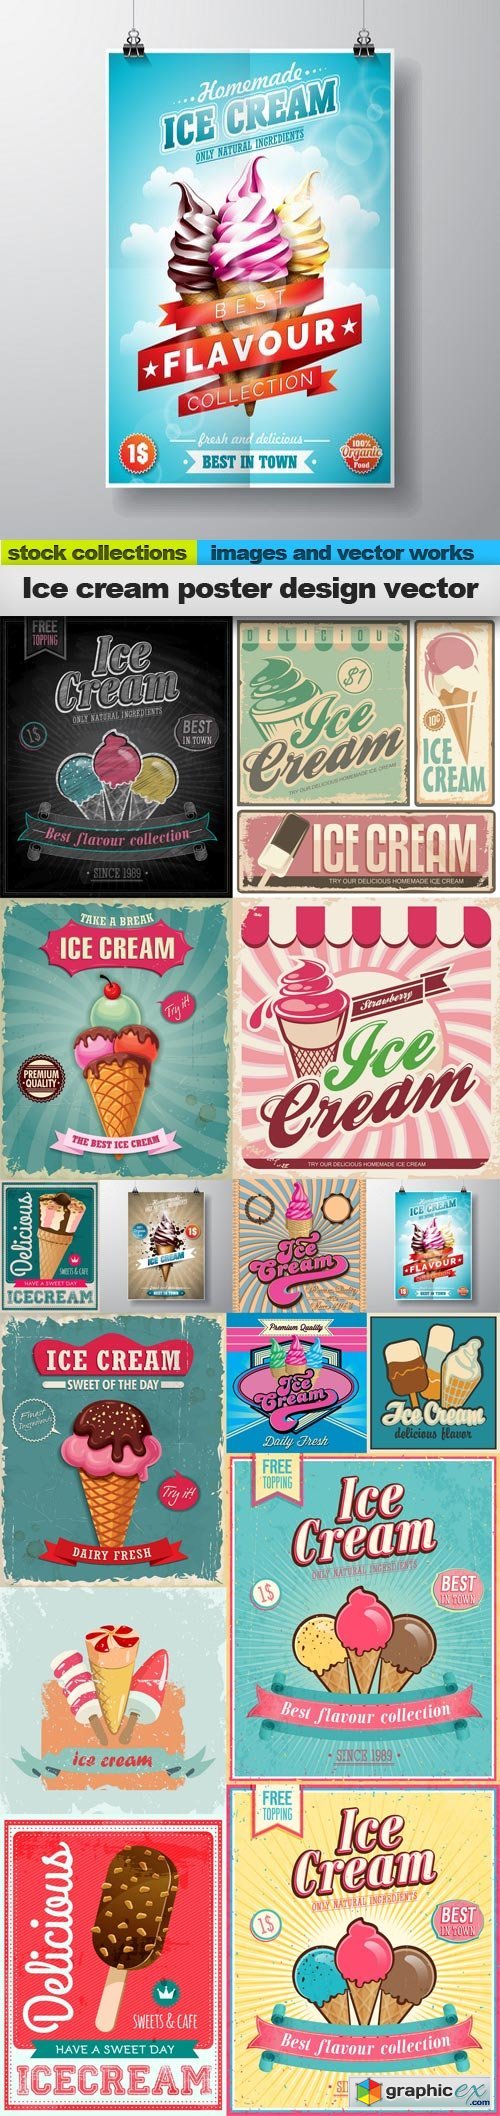 Ice cream poster design vector, 15 x EPS